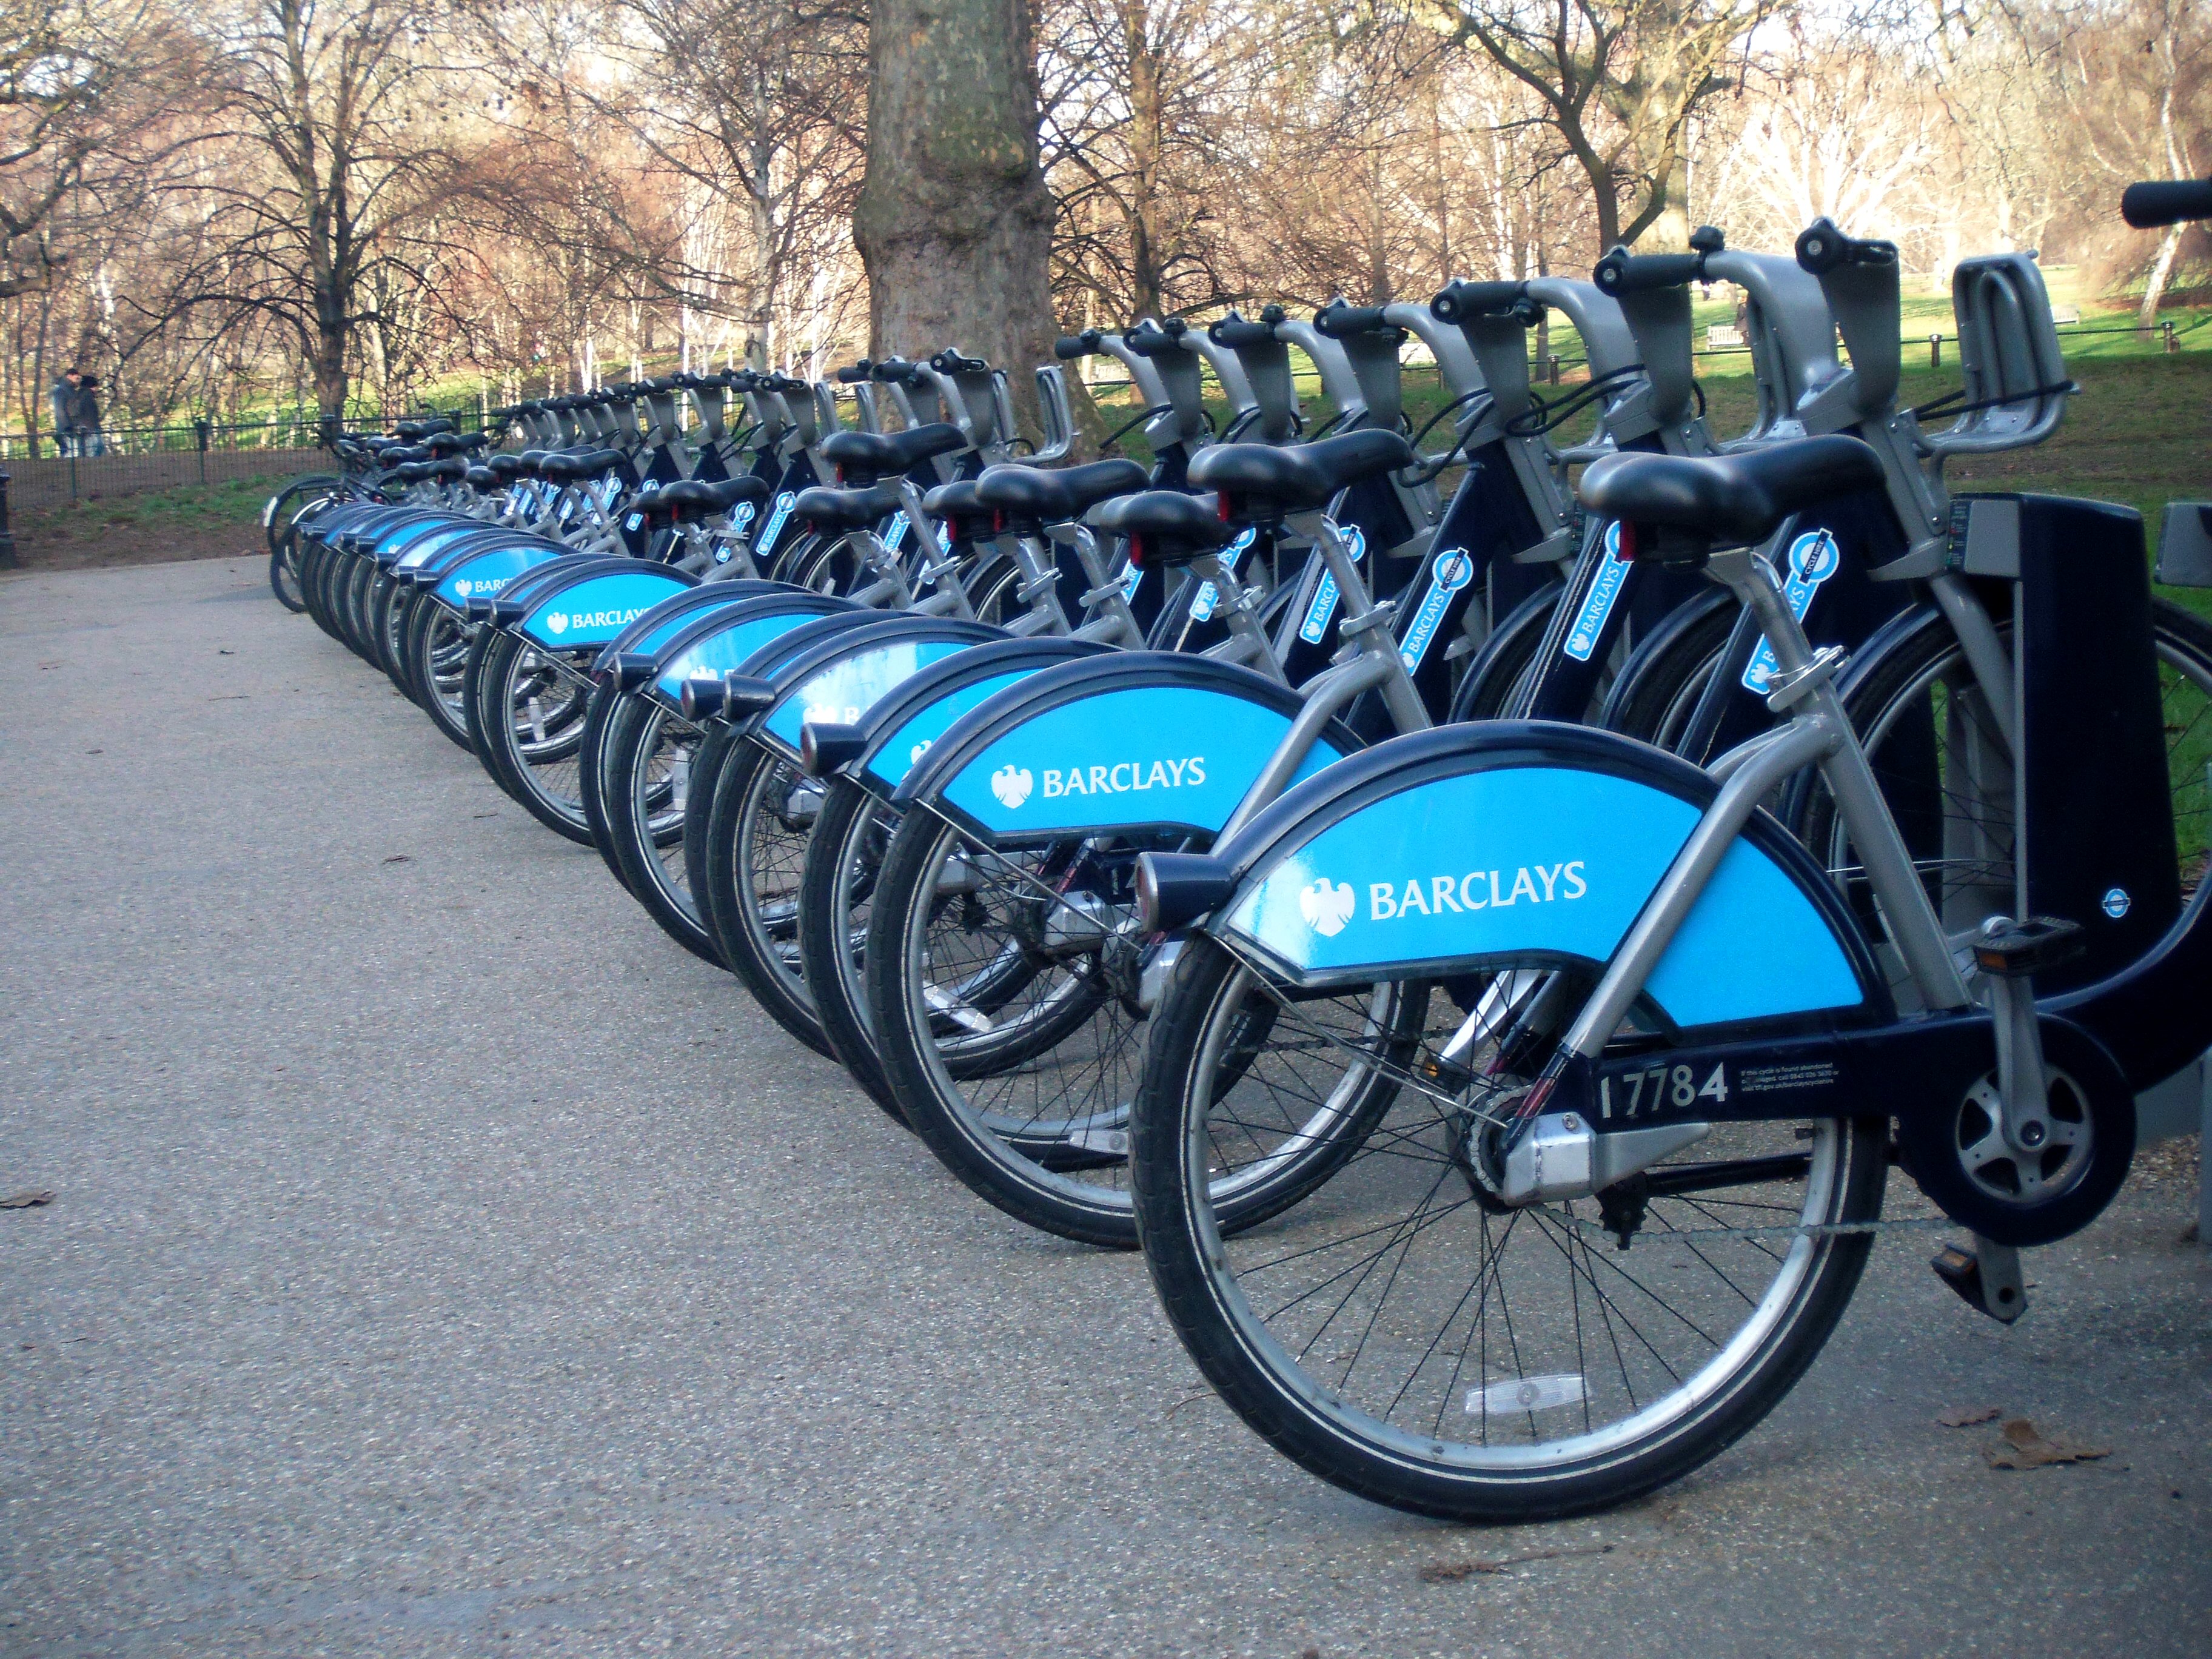 Are ‘Boris Bikes’ coming to Royal Holloway?